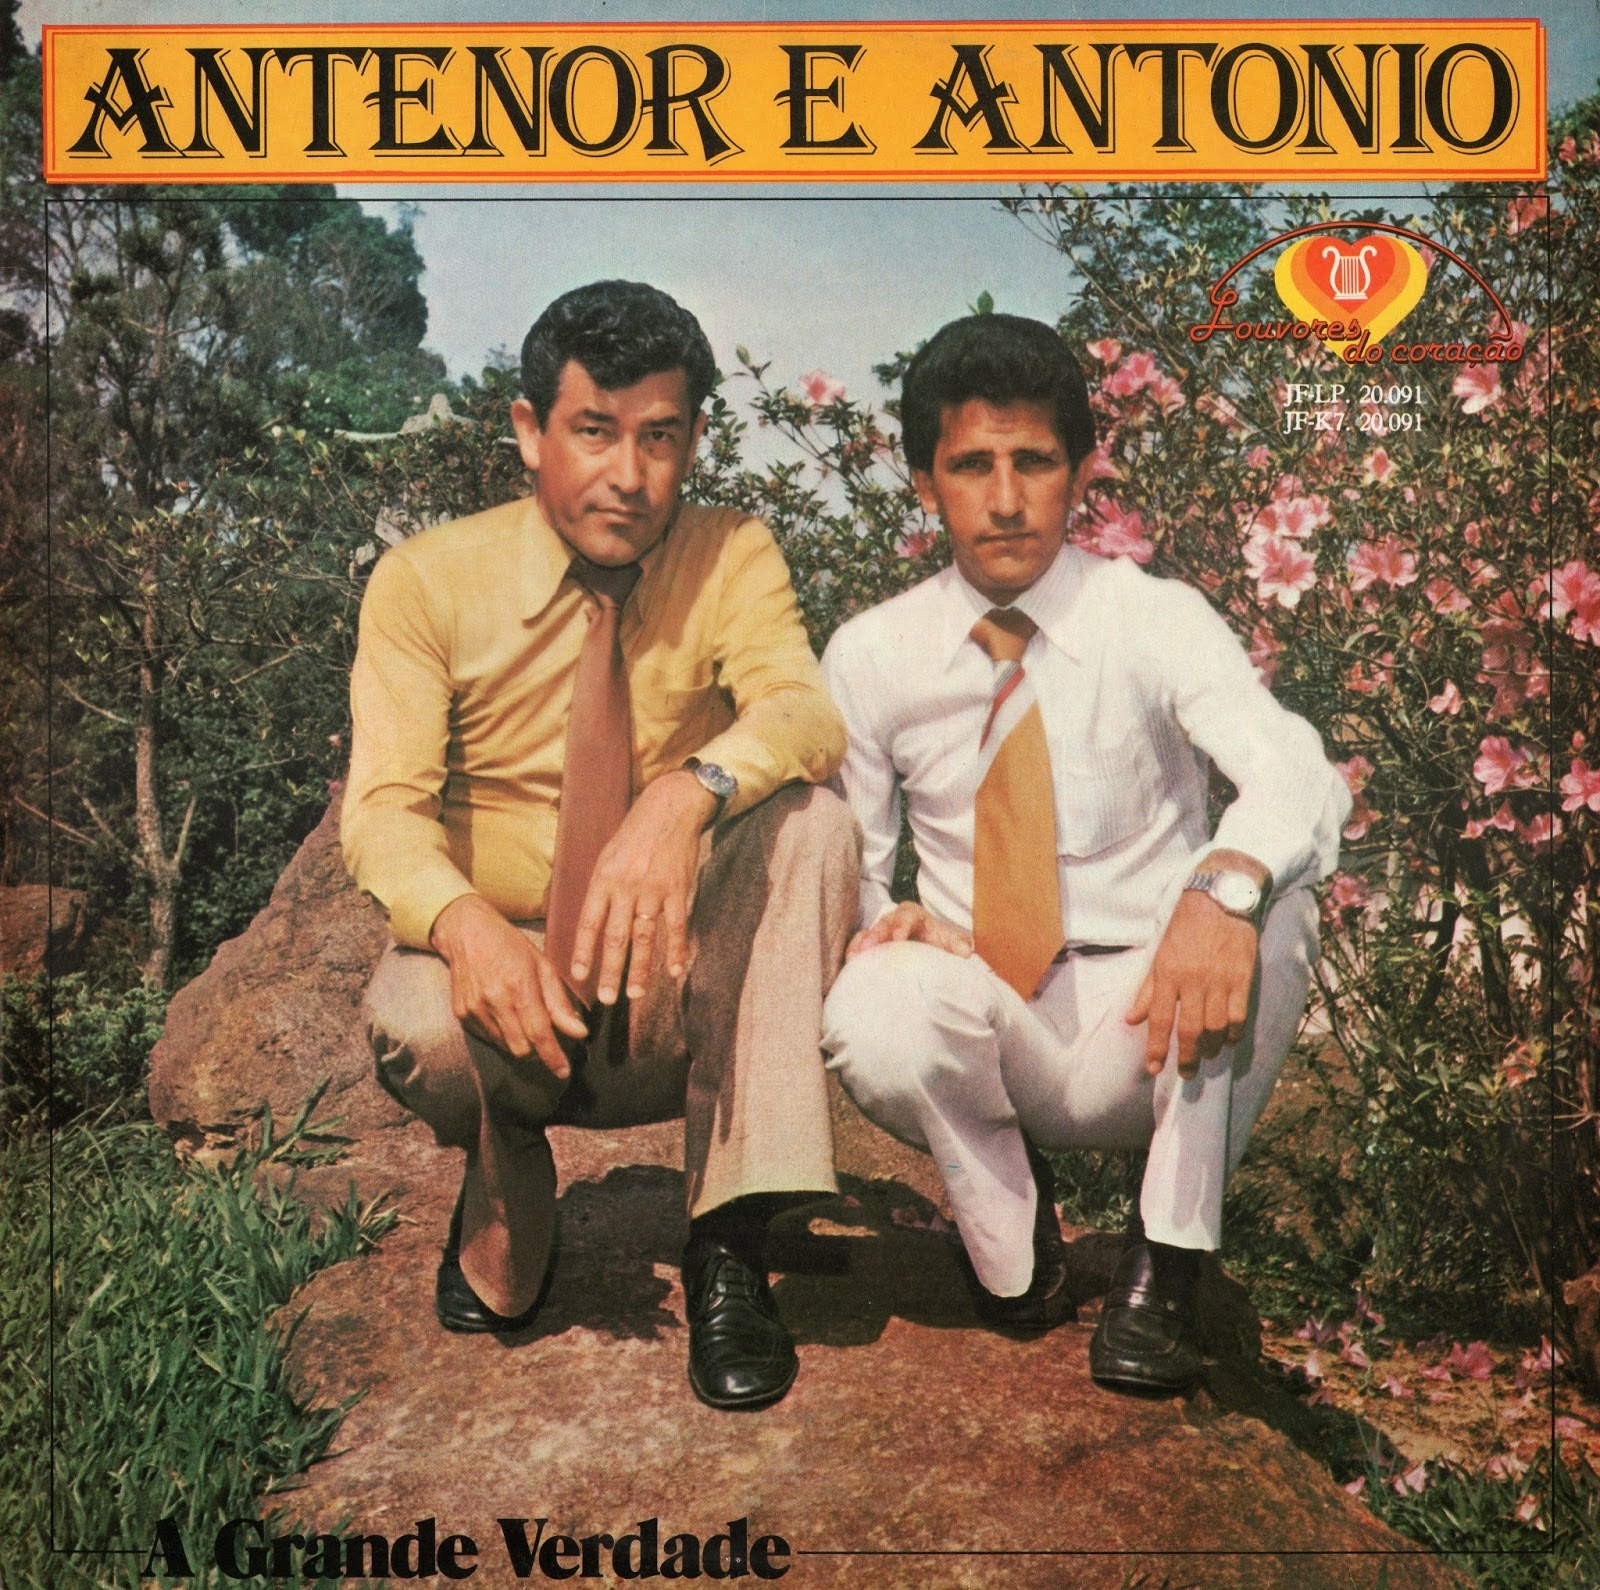 Antenor e Antonio-A grande verdade CREDITO ROCHA ETERNA